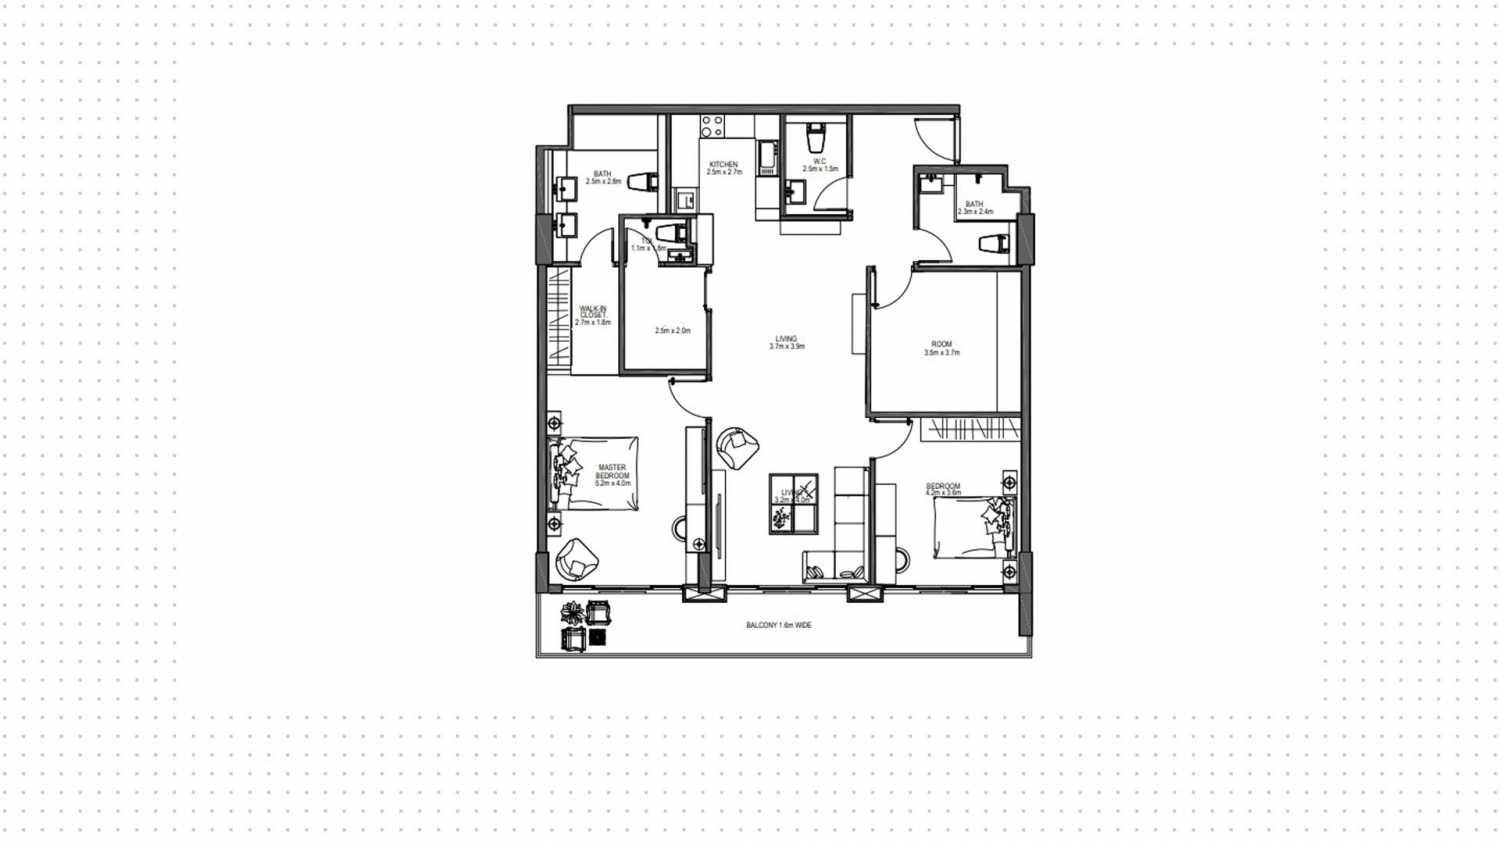 6-bedroom apartment-0-1